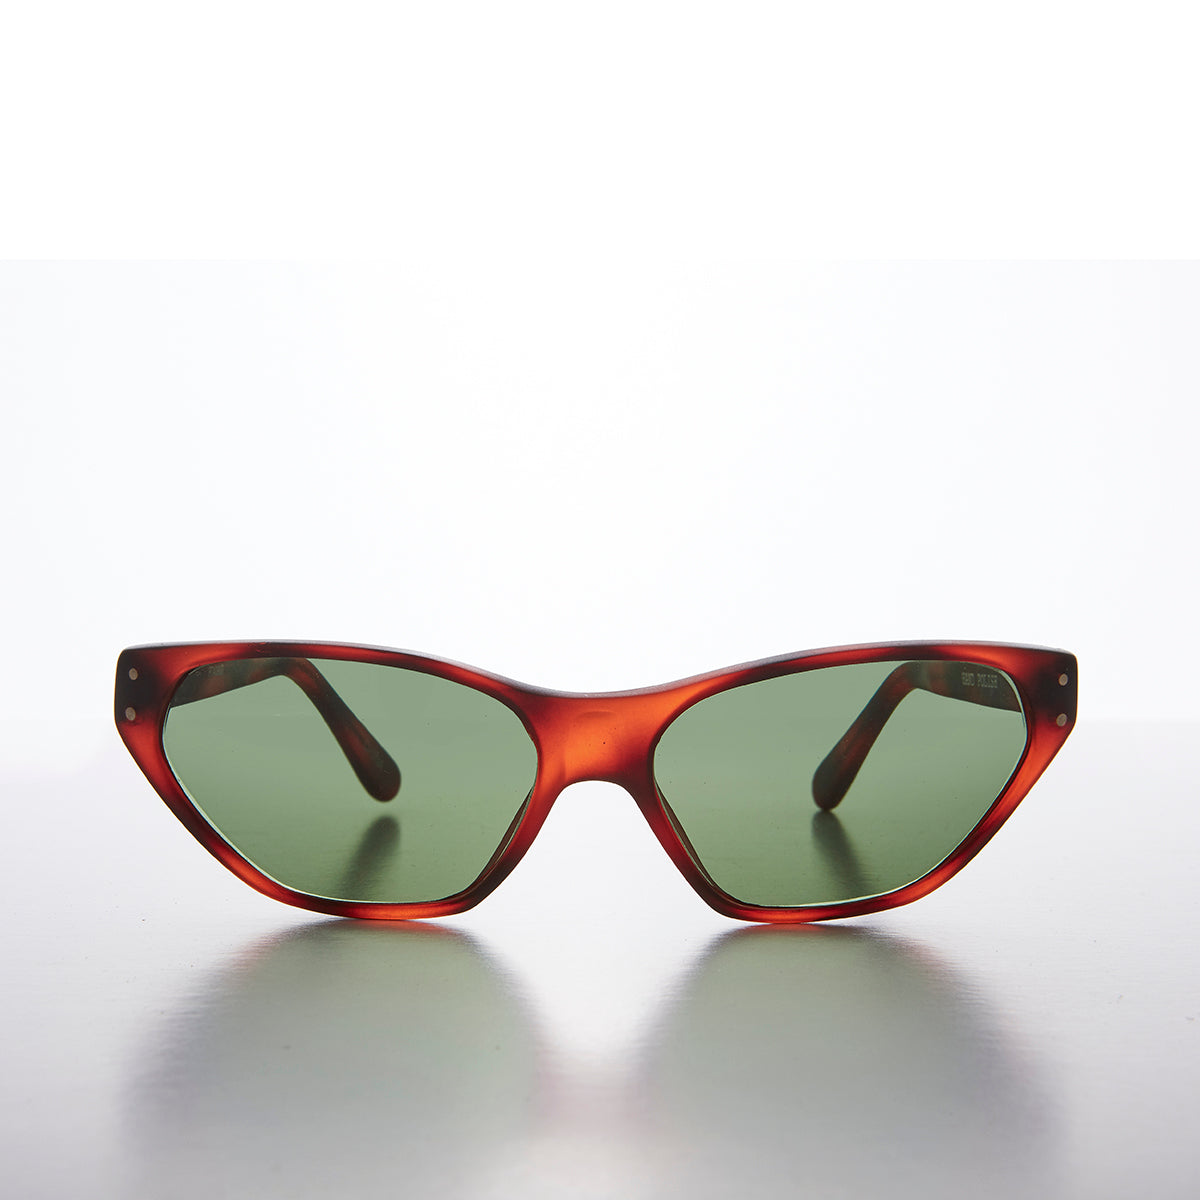 Narrow Edgy 90s Rocker Cat Eye Vintage Sunglasses 